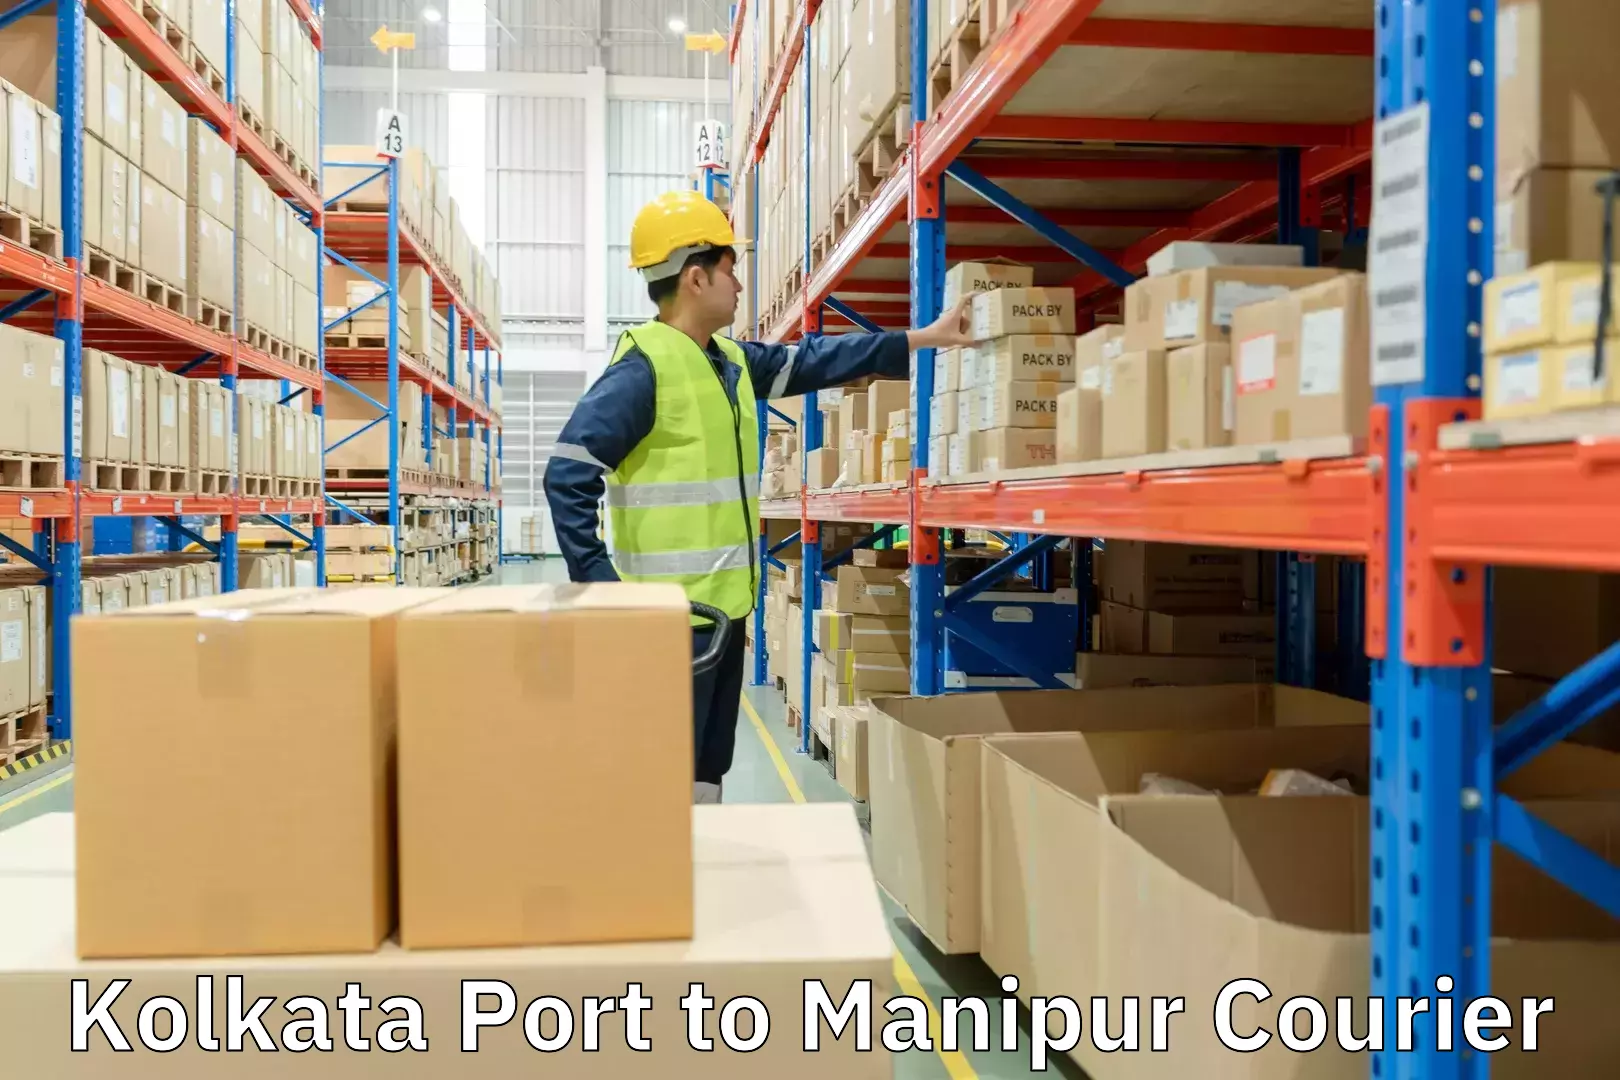 Digital courier platforms Kolkata Port to Kanti